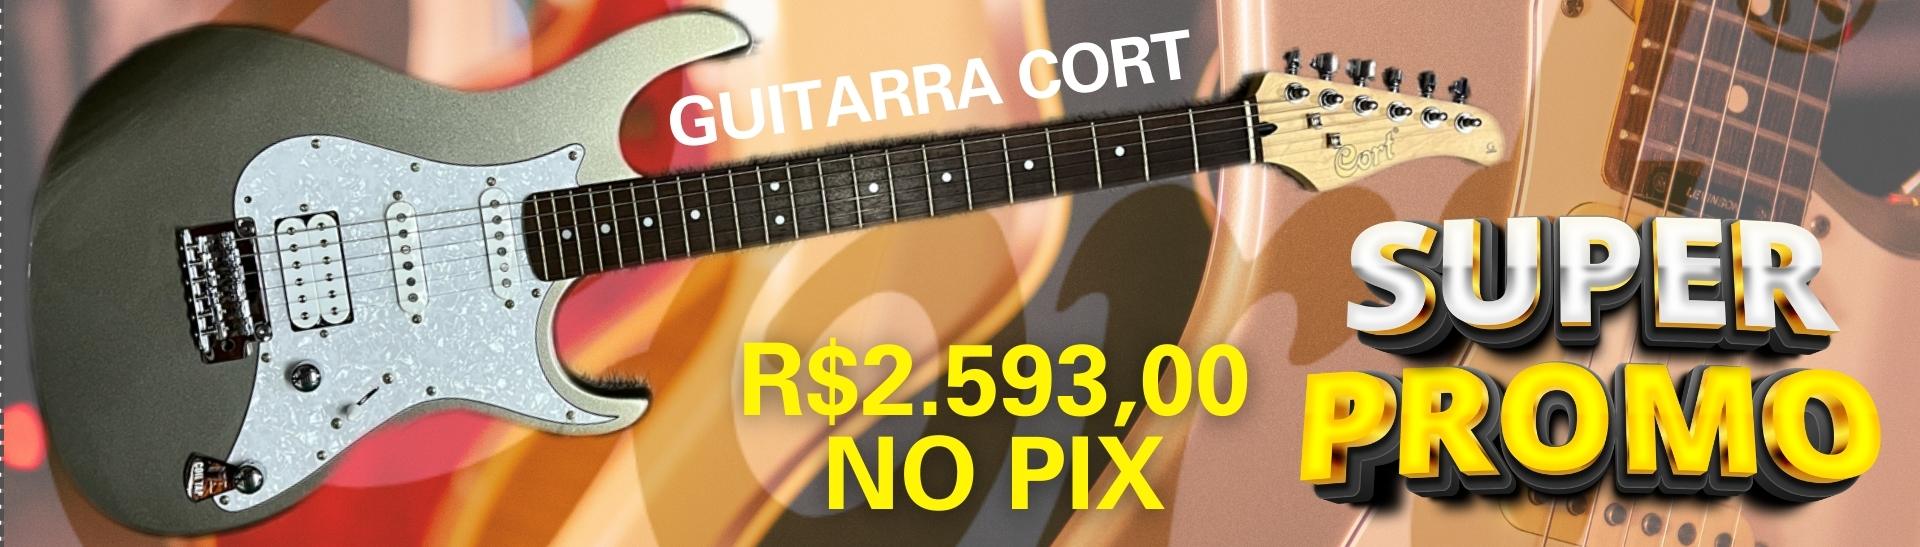 Guitarra Cort